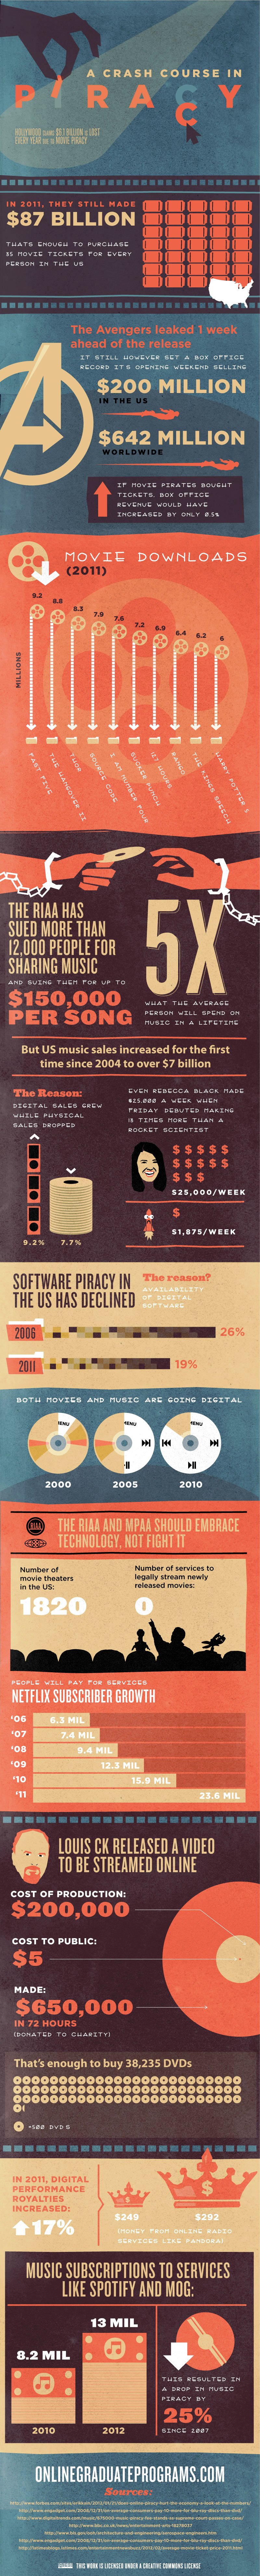 Piracy is profitable